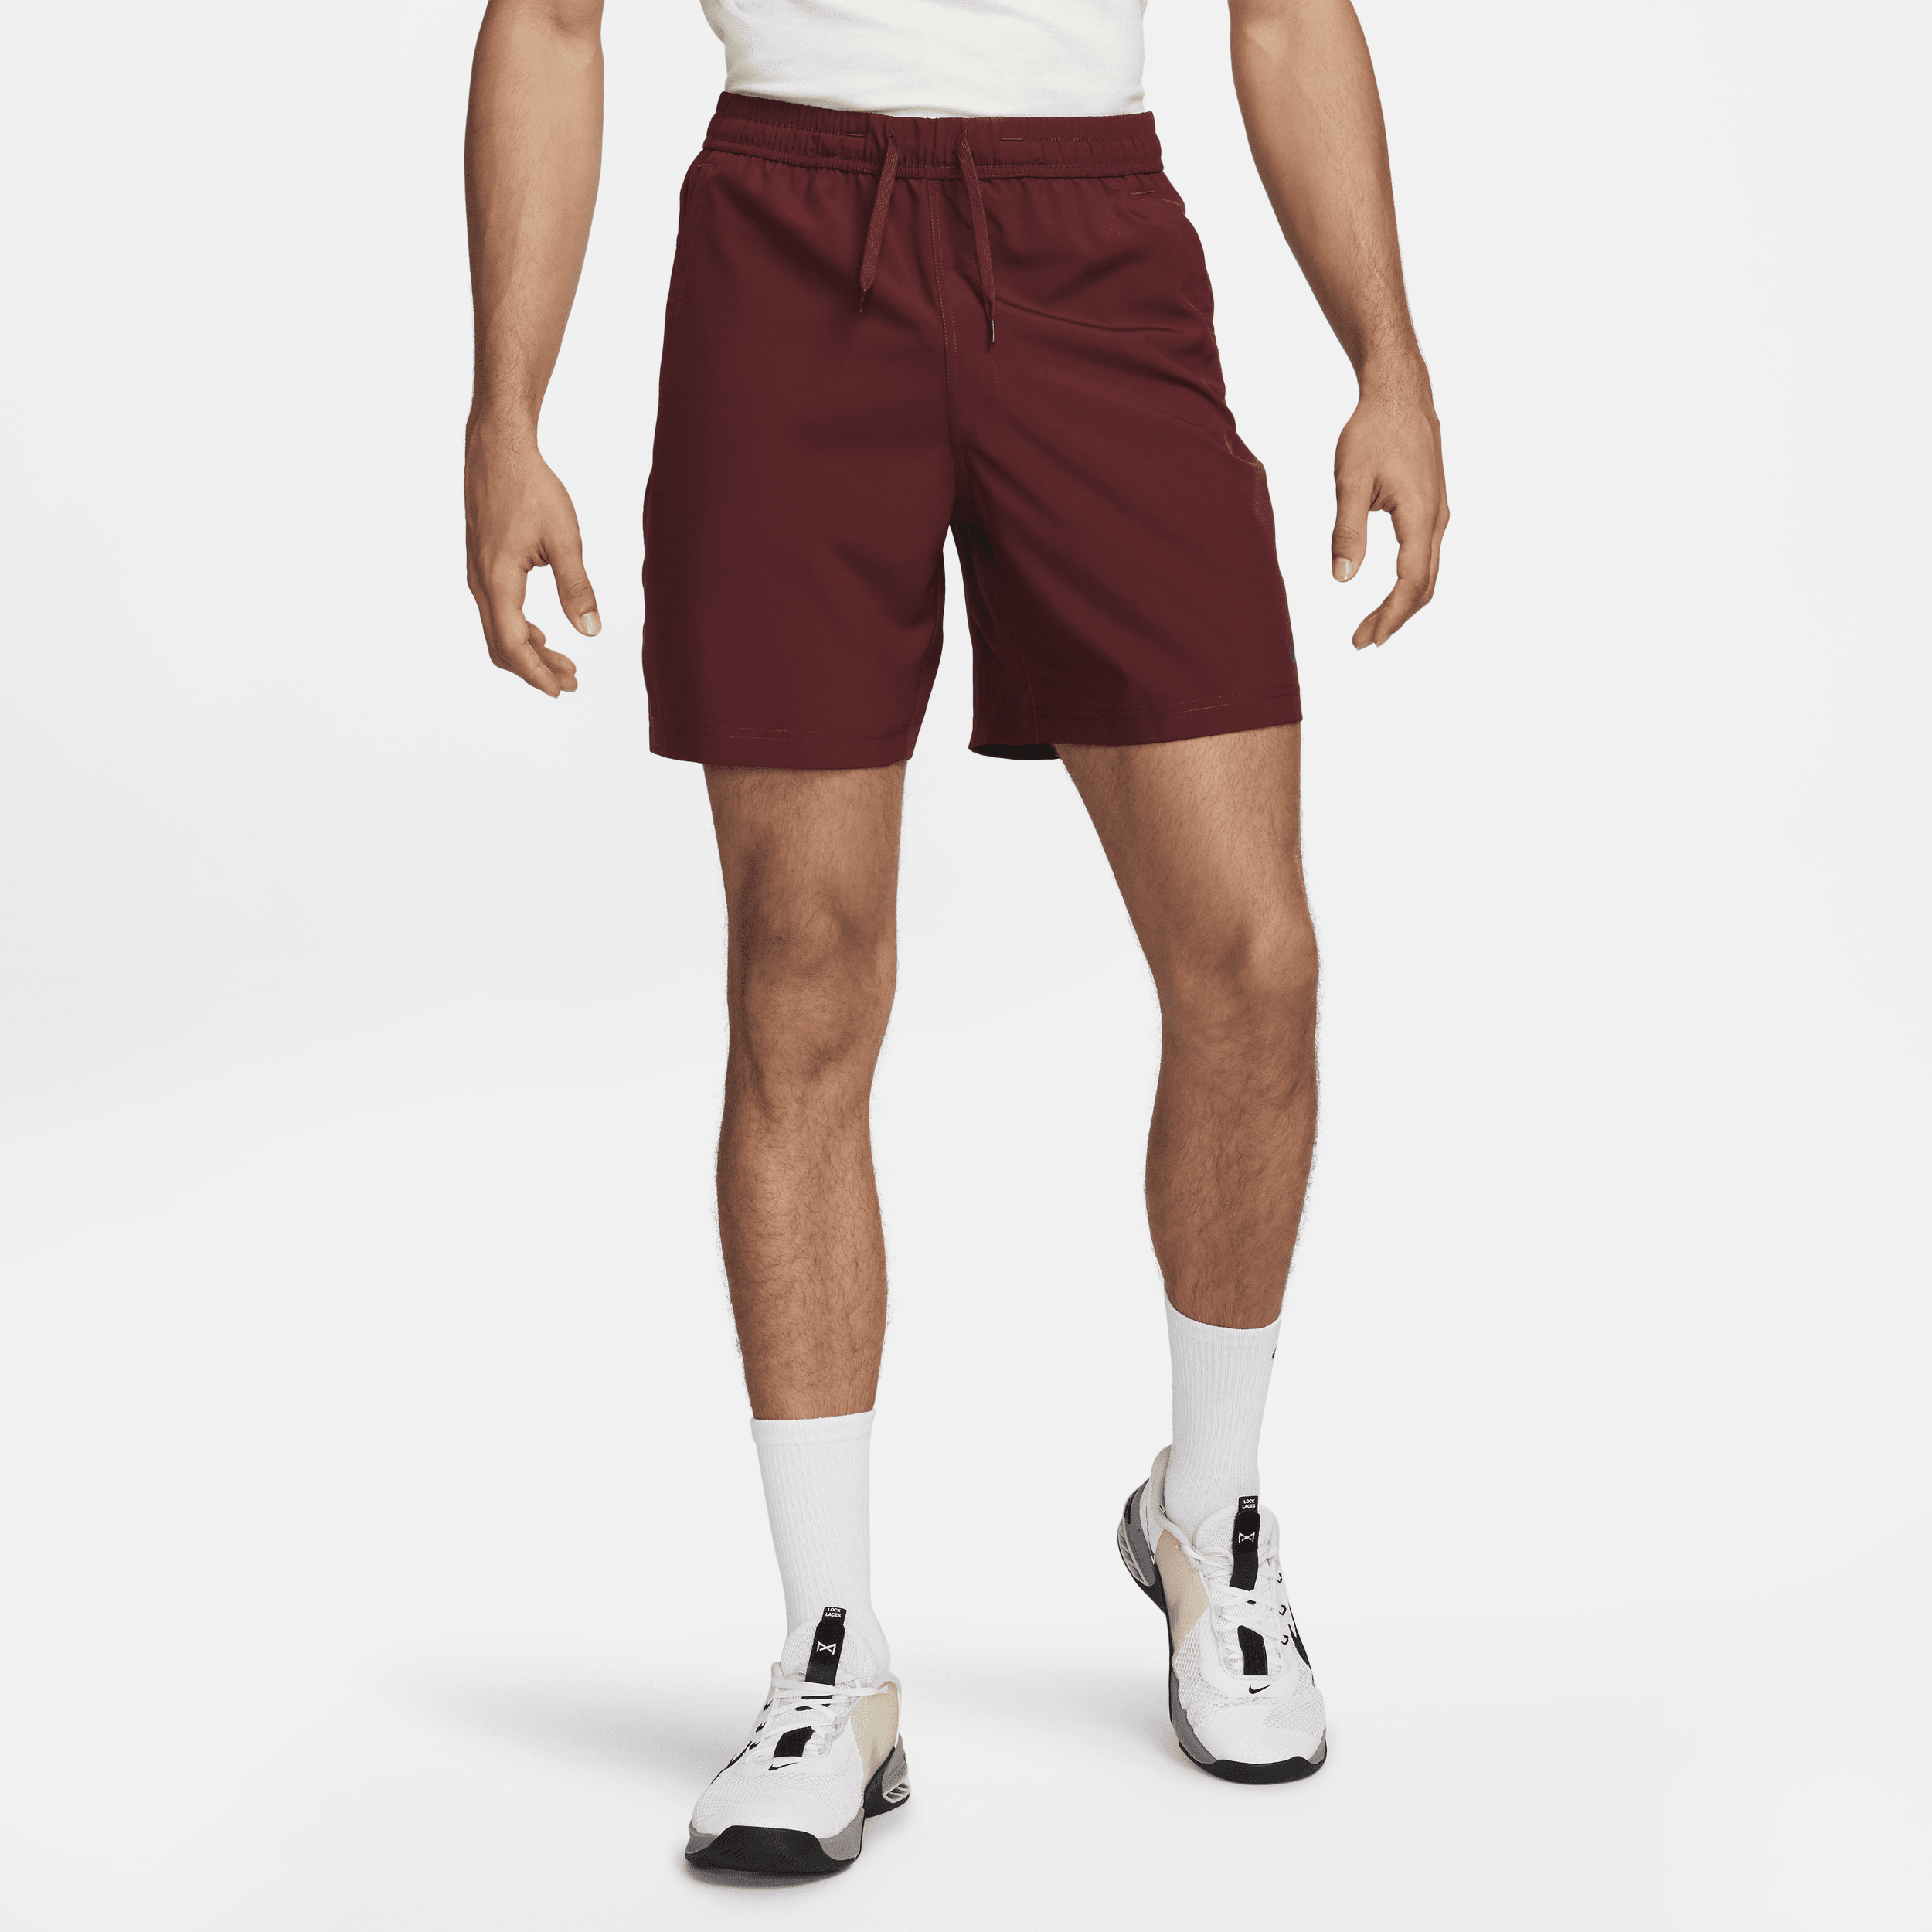 Nike Form Pantalón corto Dri-FIT versátil de 18 cm sin forro - Hombre - Rojo